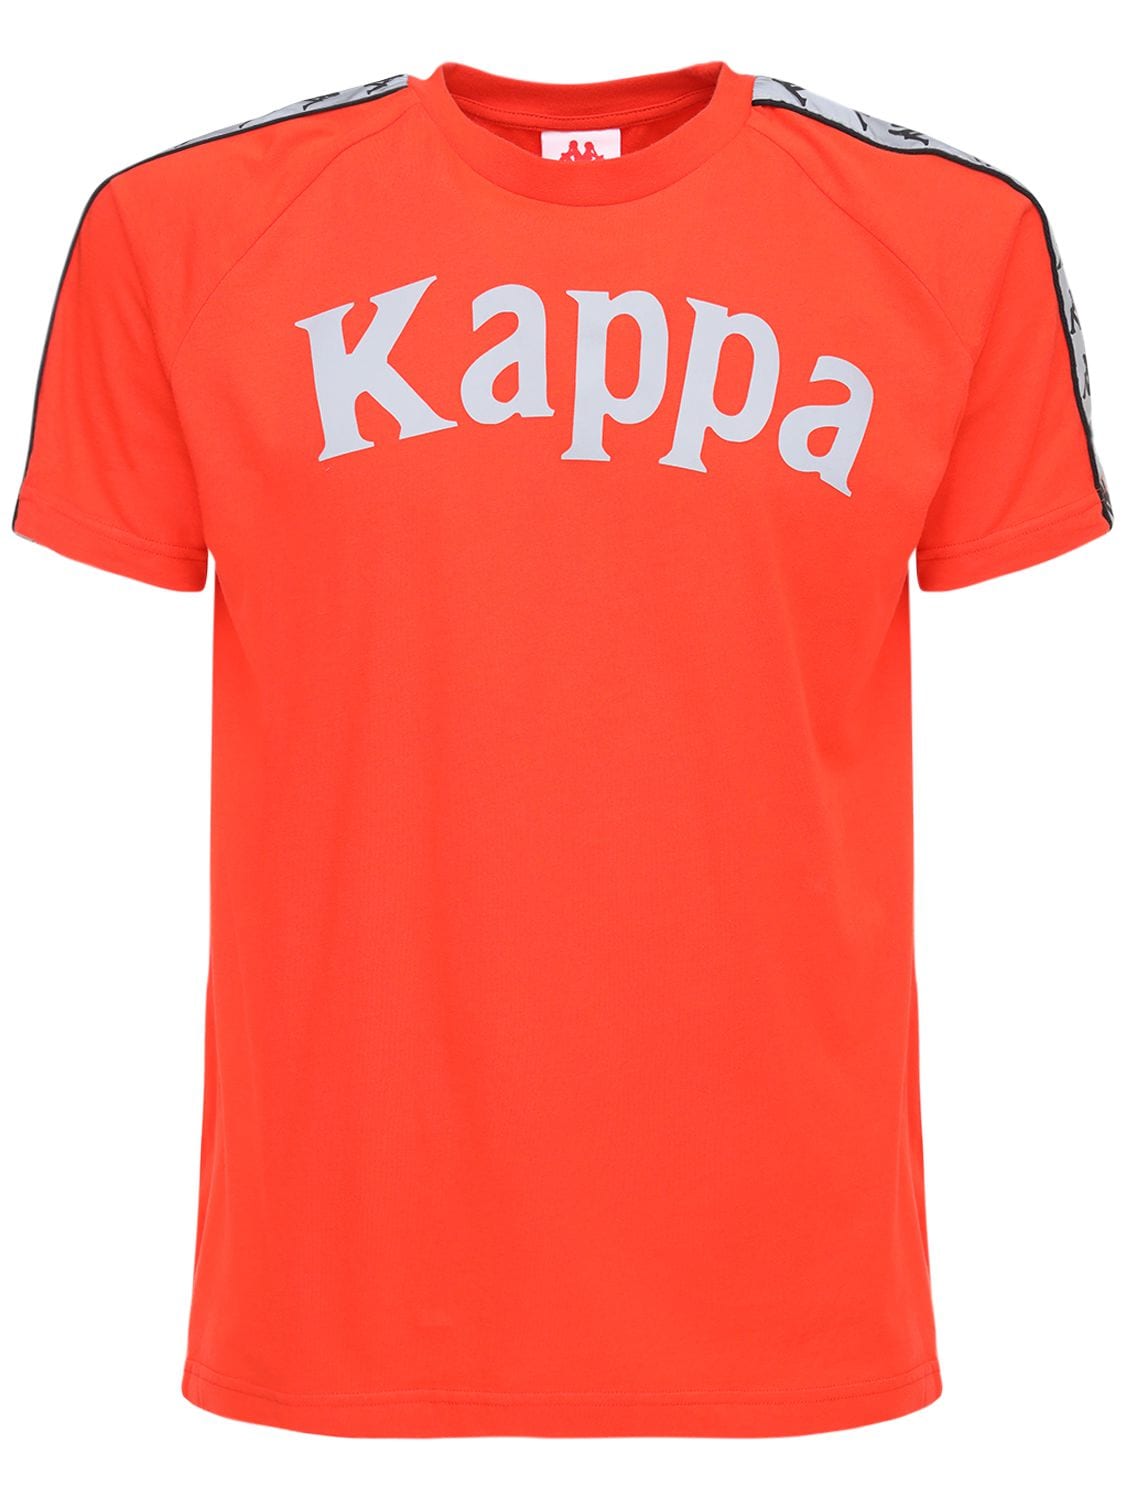 Kappa Reflective Print Cotton T-shirt In Orange